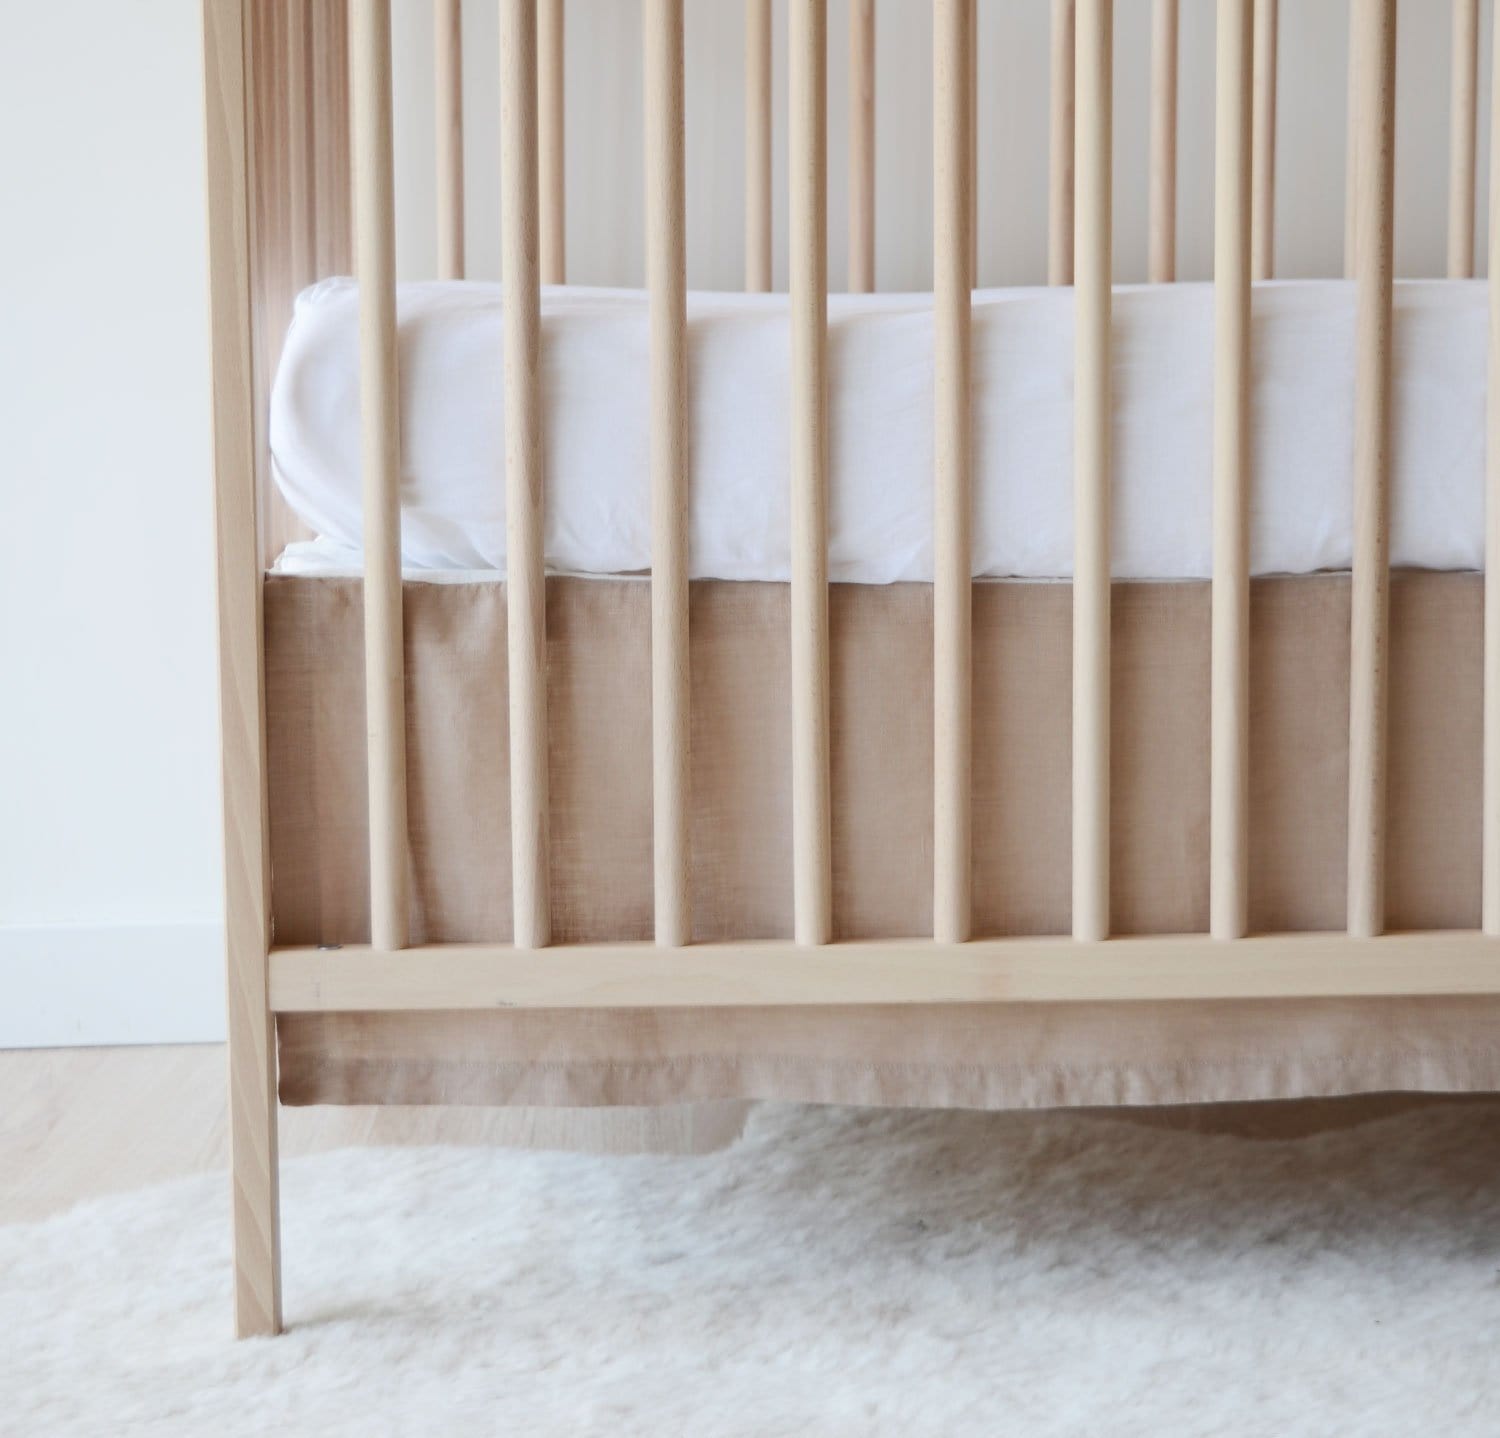 minimalist crib